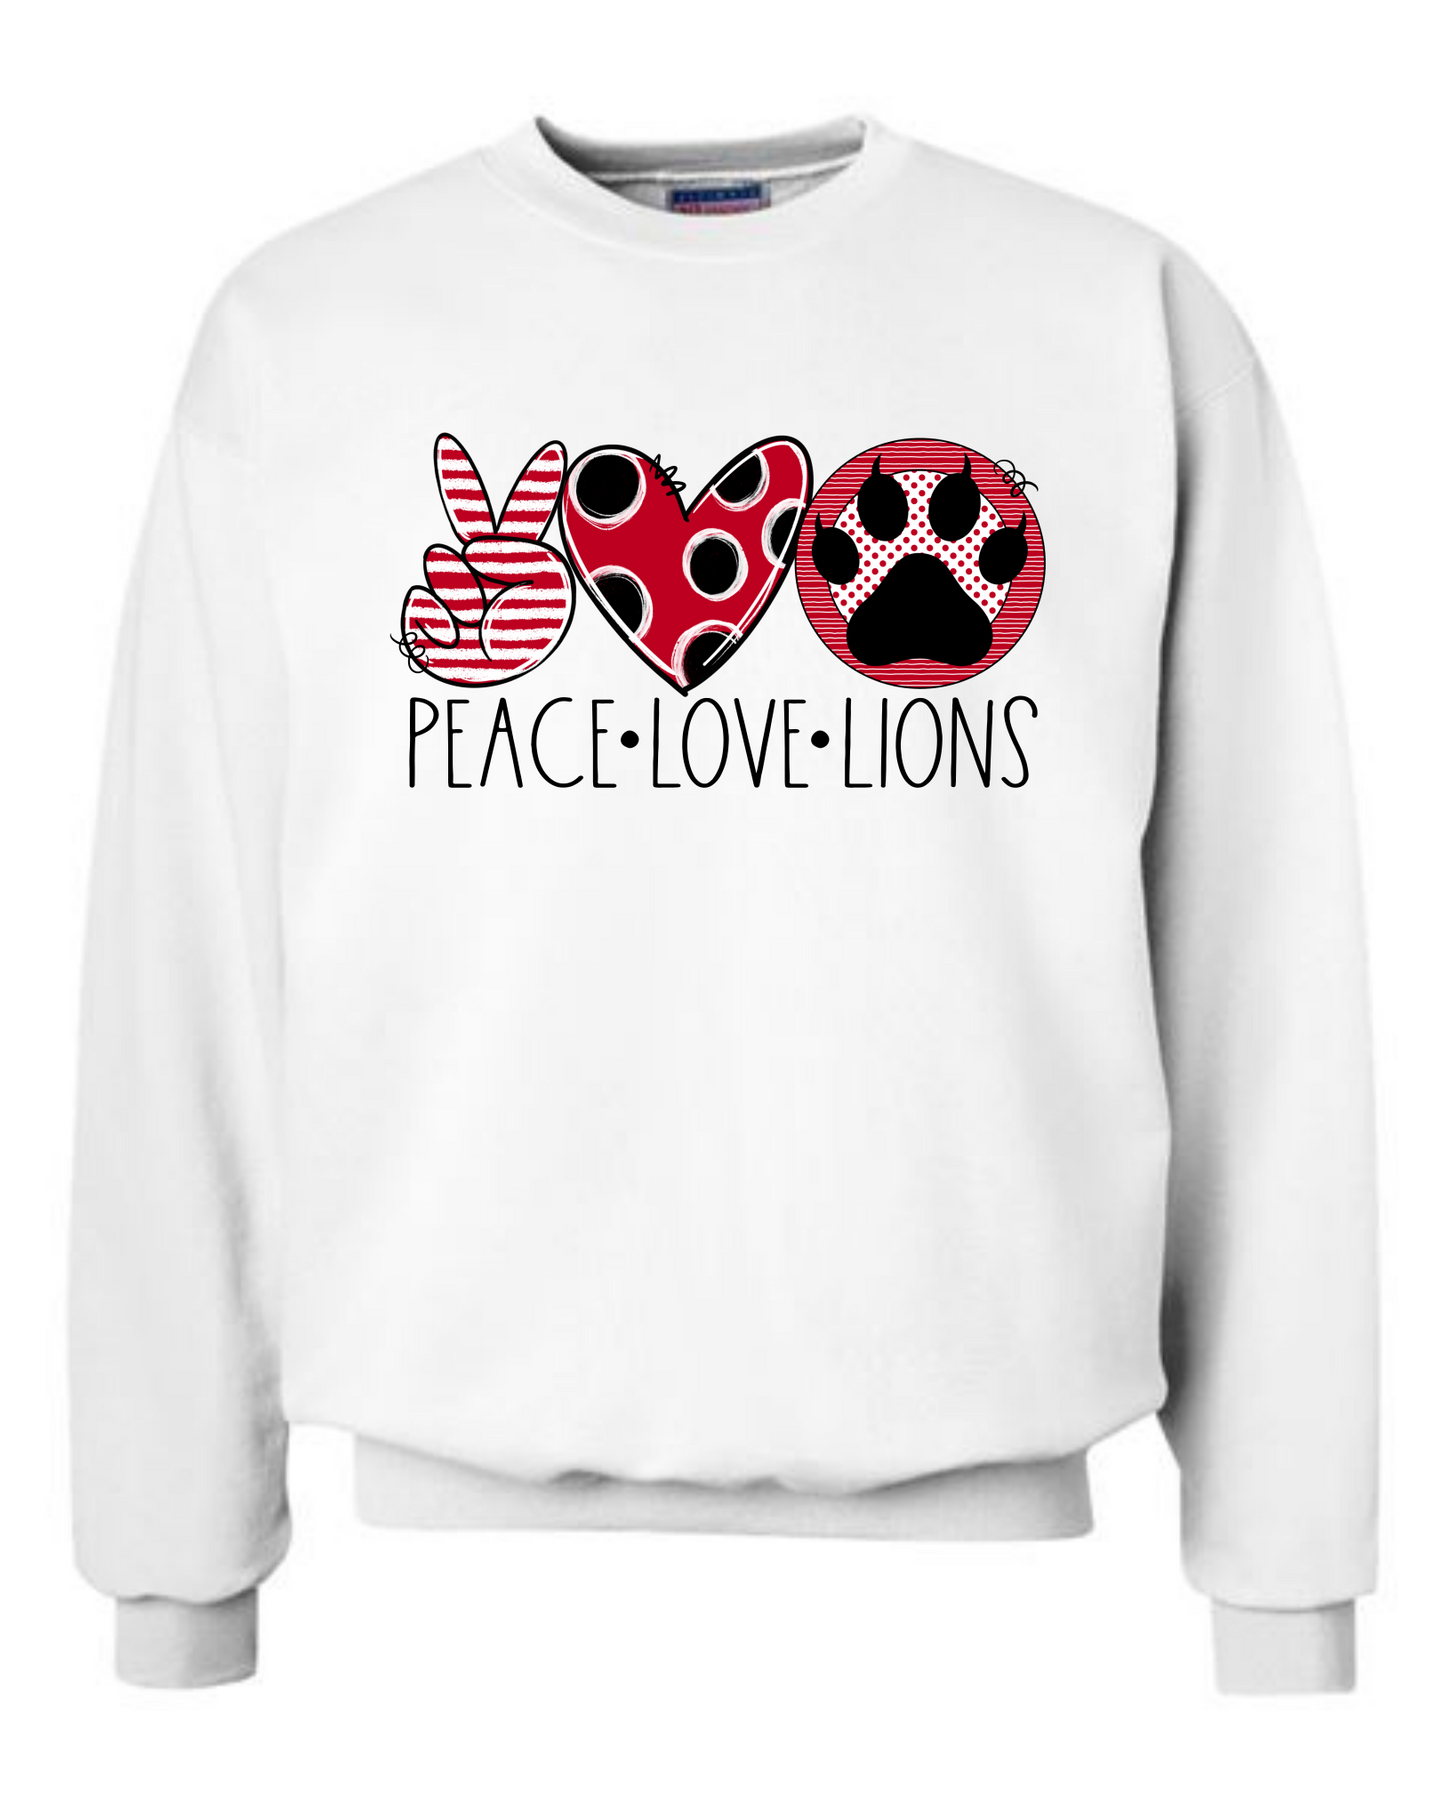 Peace Love Lions Sweatshirt